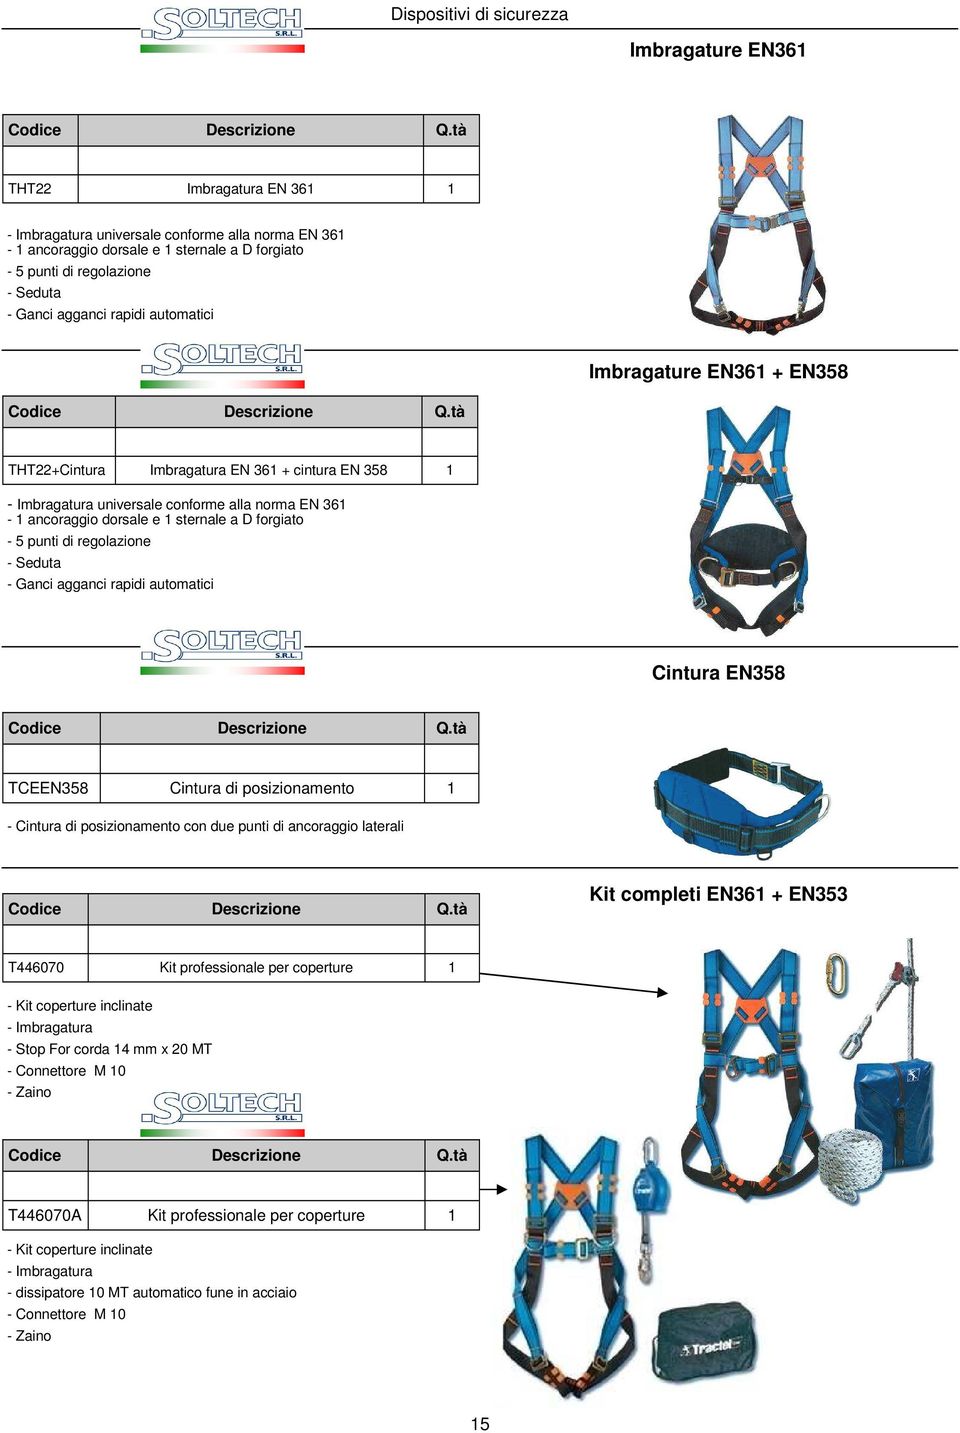 regolazione - Seduta - Ganci agganci rapidi automatici Cintura EN358 TCEEN358 Cintura di posizionamento - Cintura di posizionamento con due punti di ancoraggio laterali Kit completi EN36 + EN353